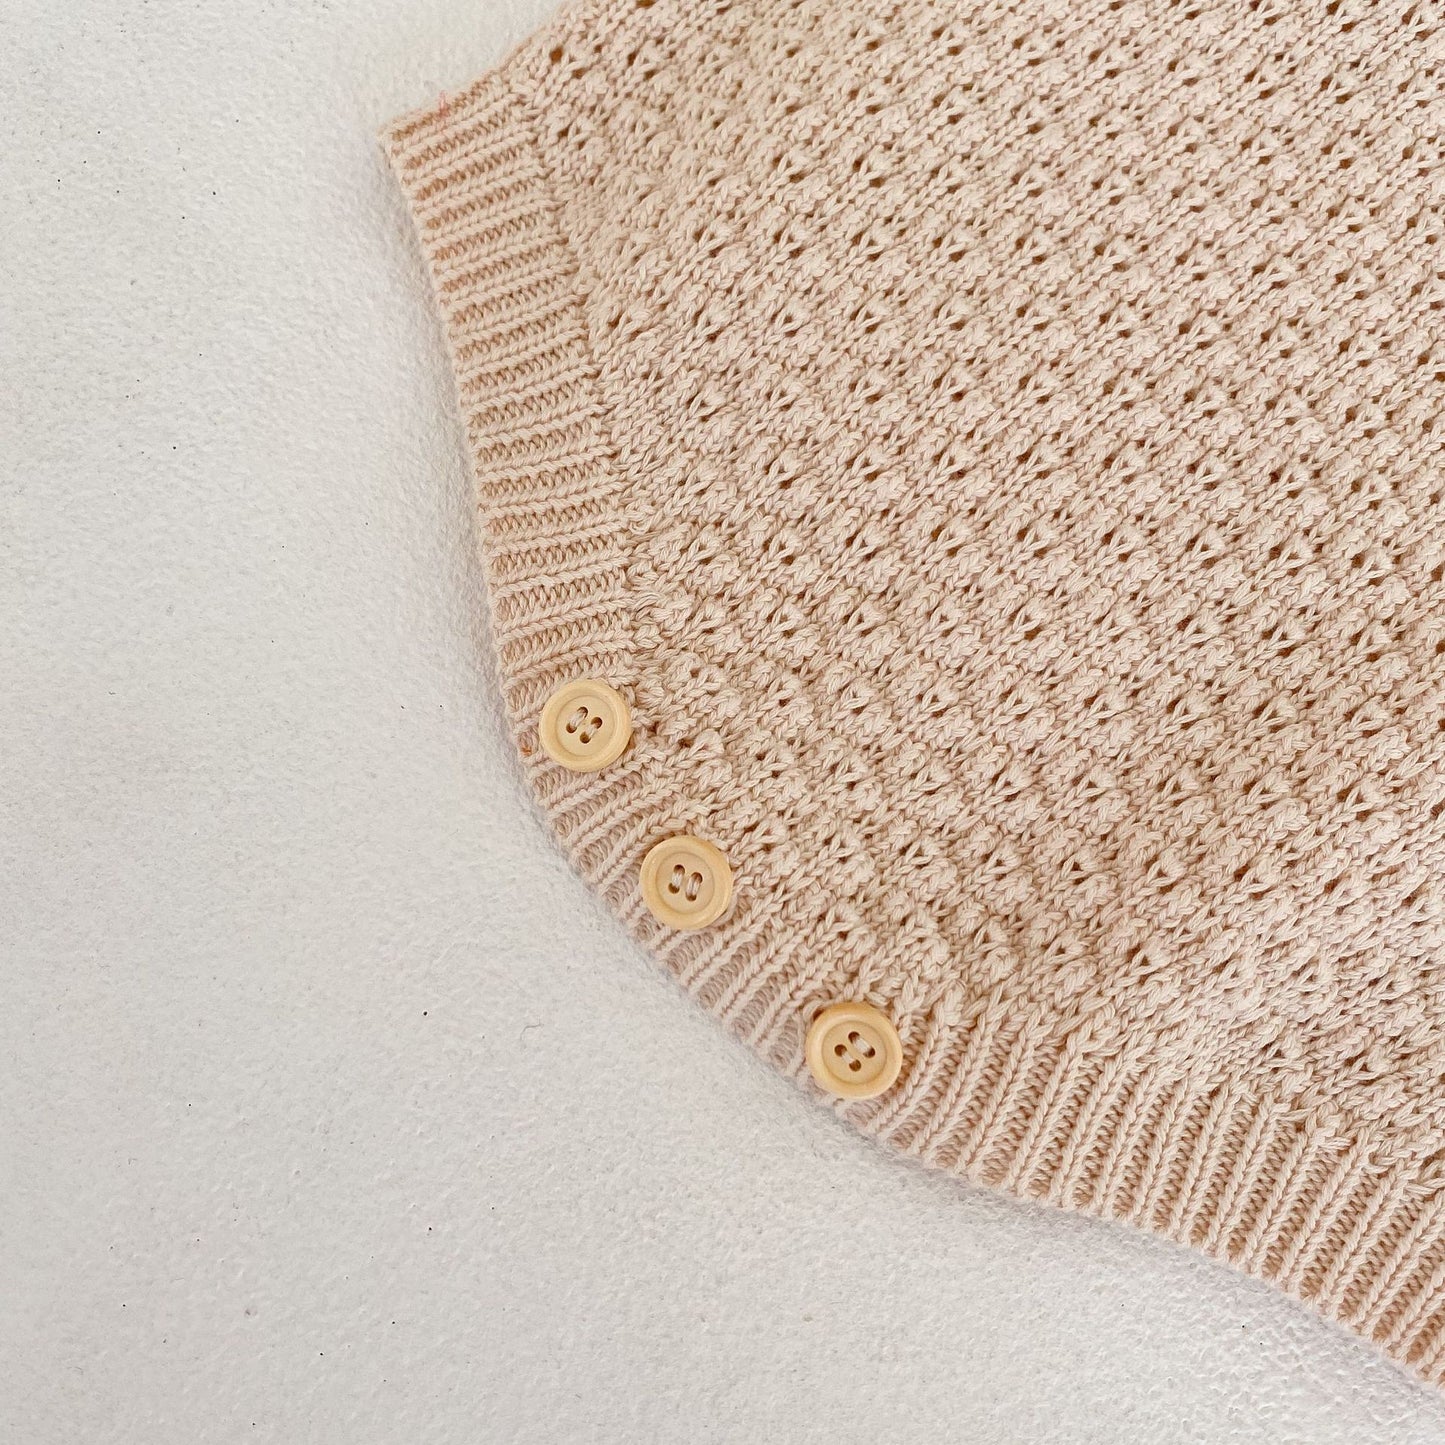 Crochet Knit Overalls